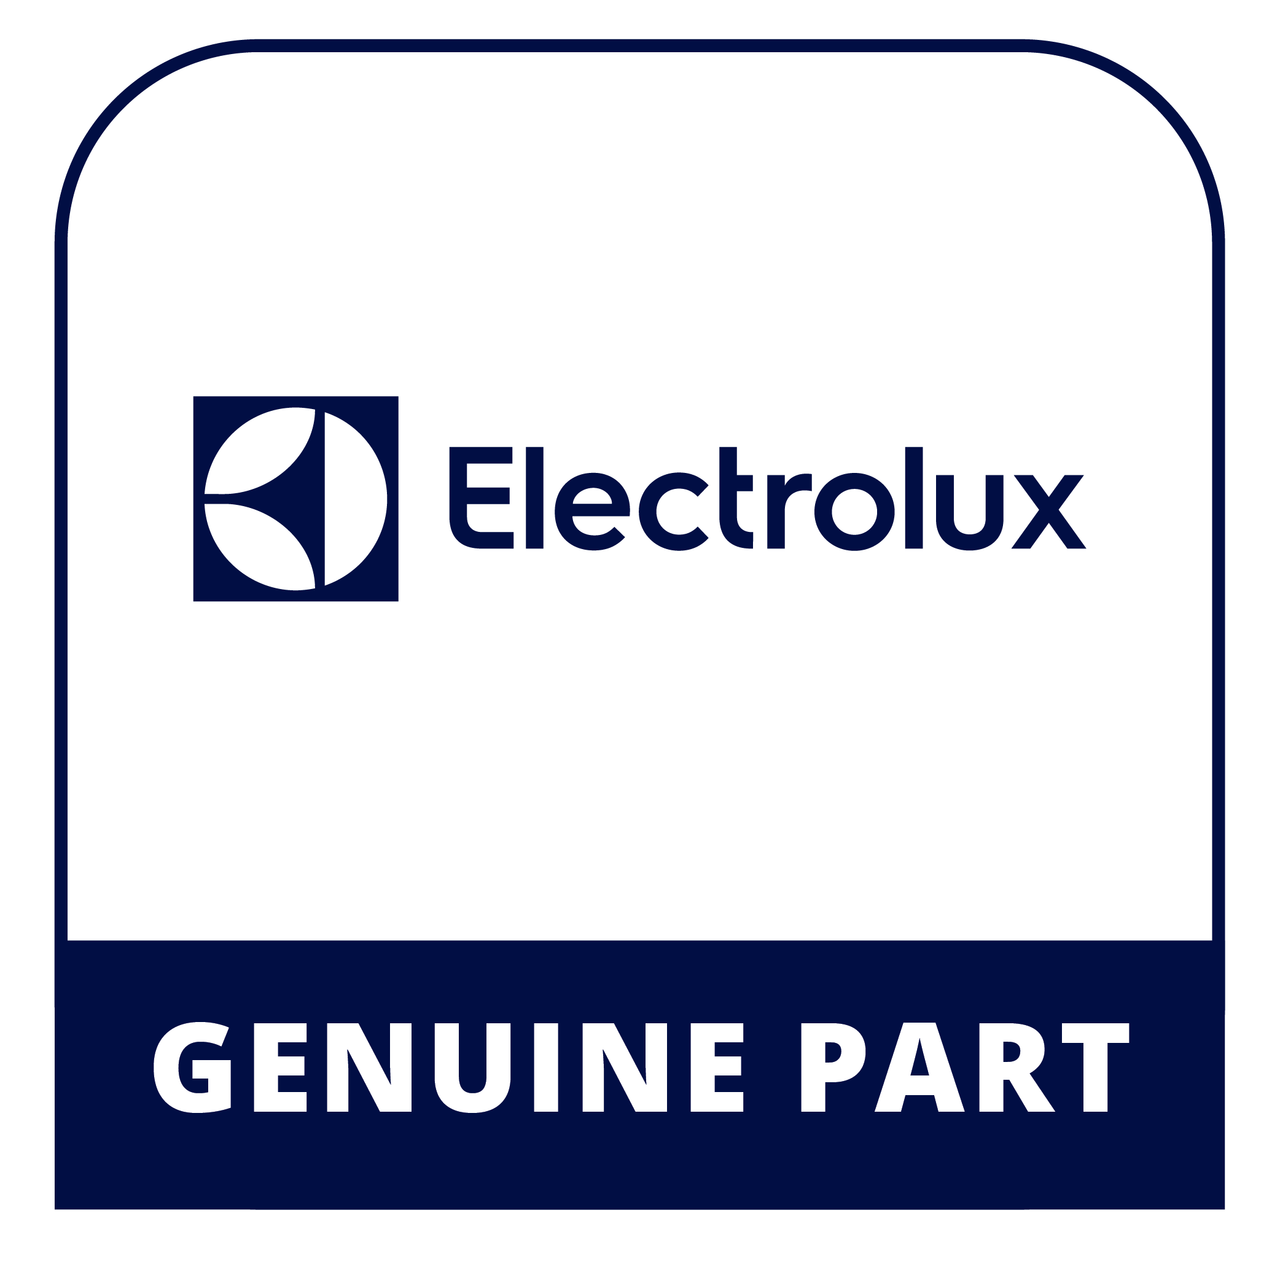 Frigidaire - Electrolux 316545301 - Handle - Genuine Electrolux Part